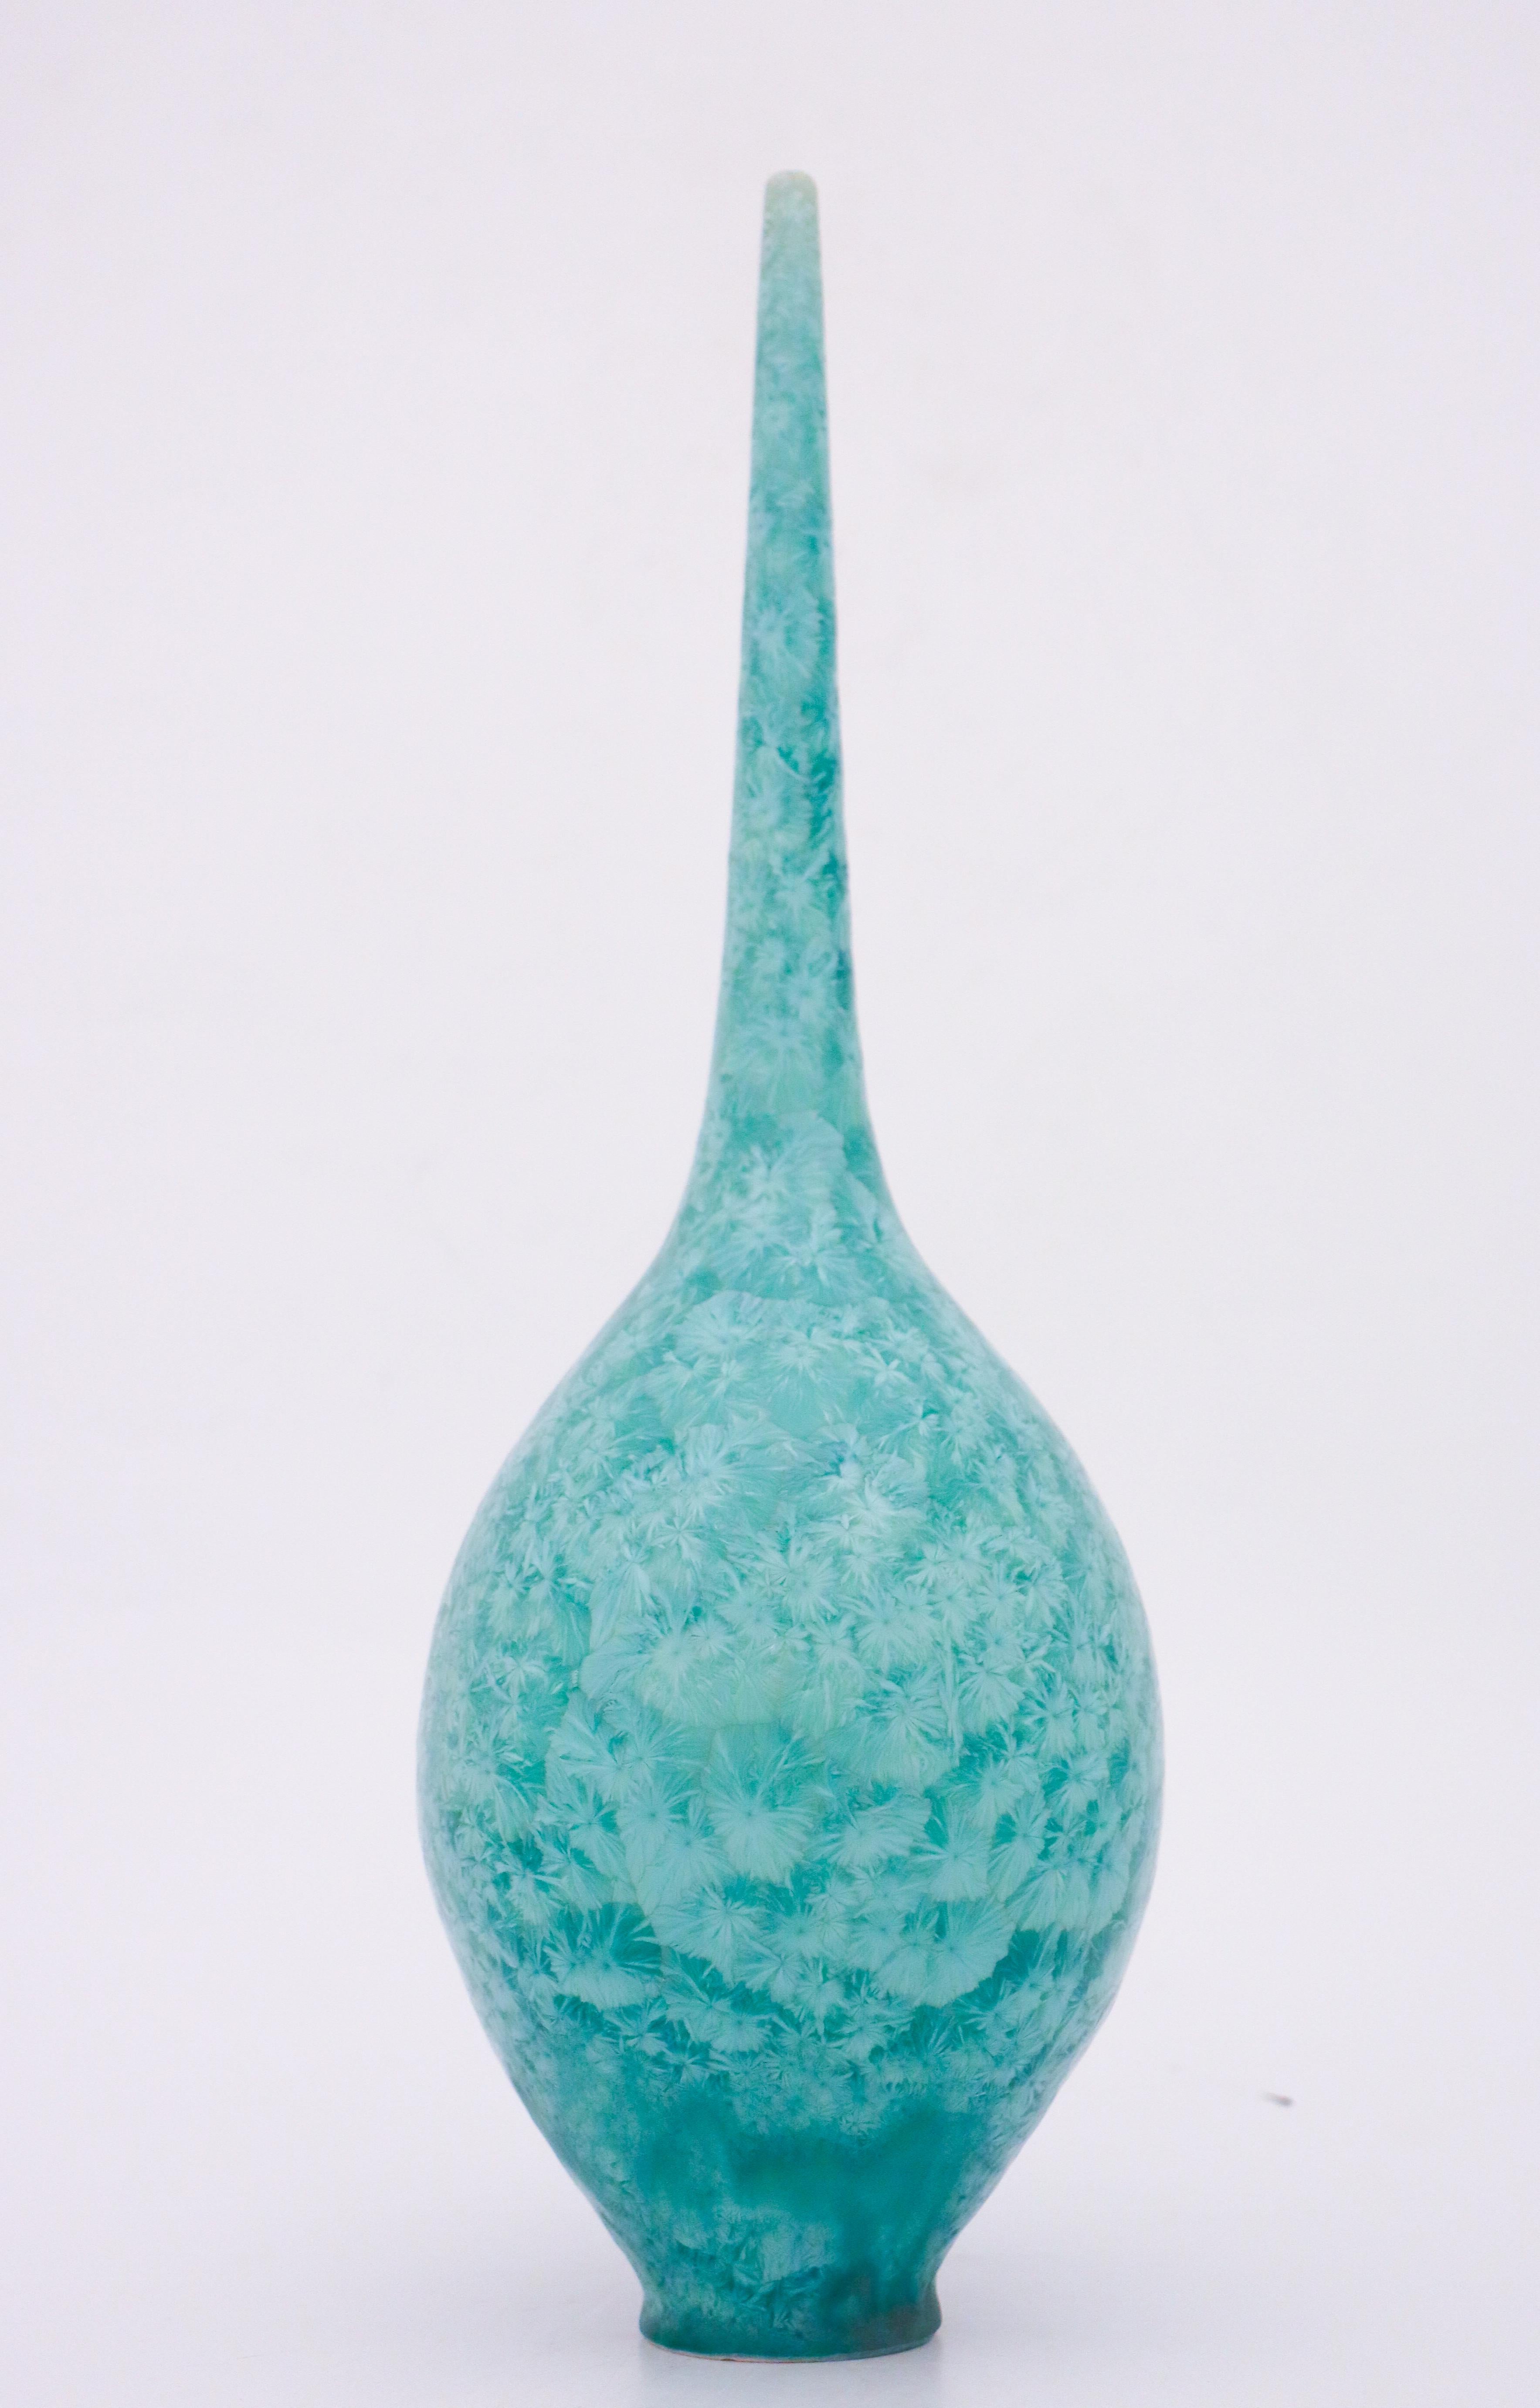 Scandinavian Modern Isak Isaksson, Turquoise Crystalline Glaze, Contemporary Swedish Ceramicist